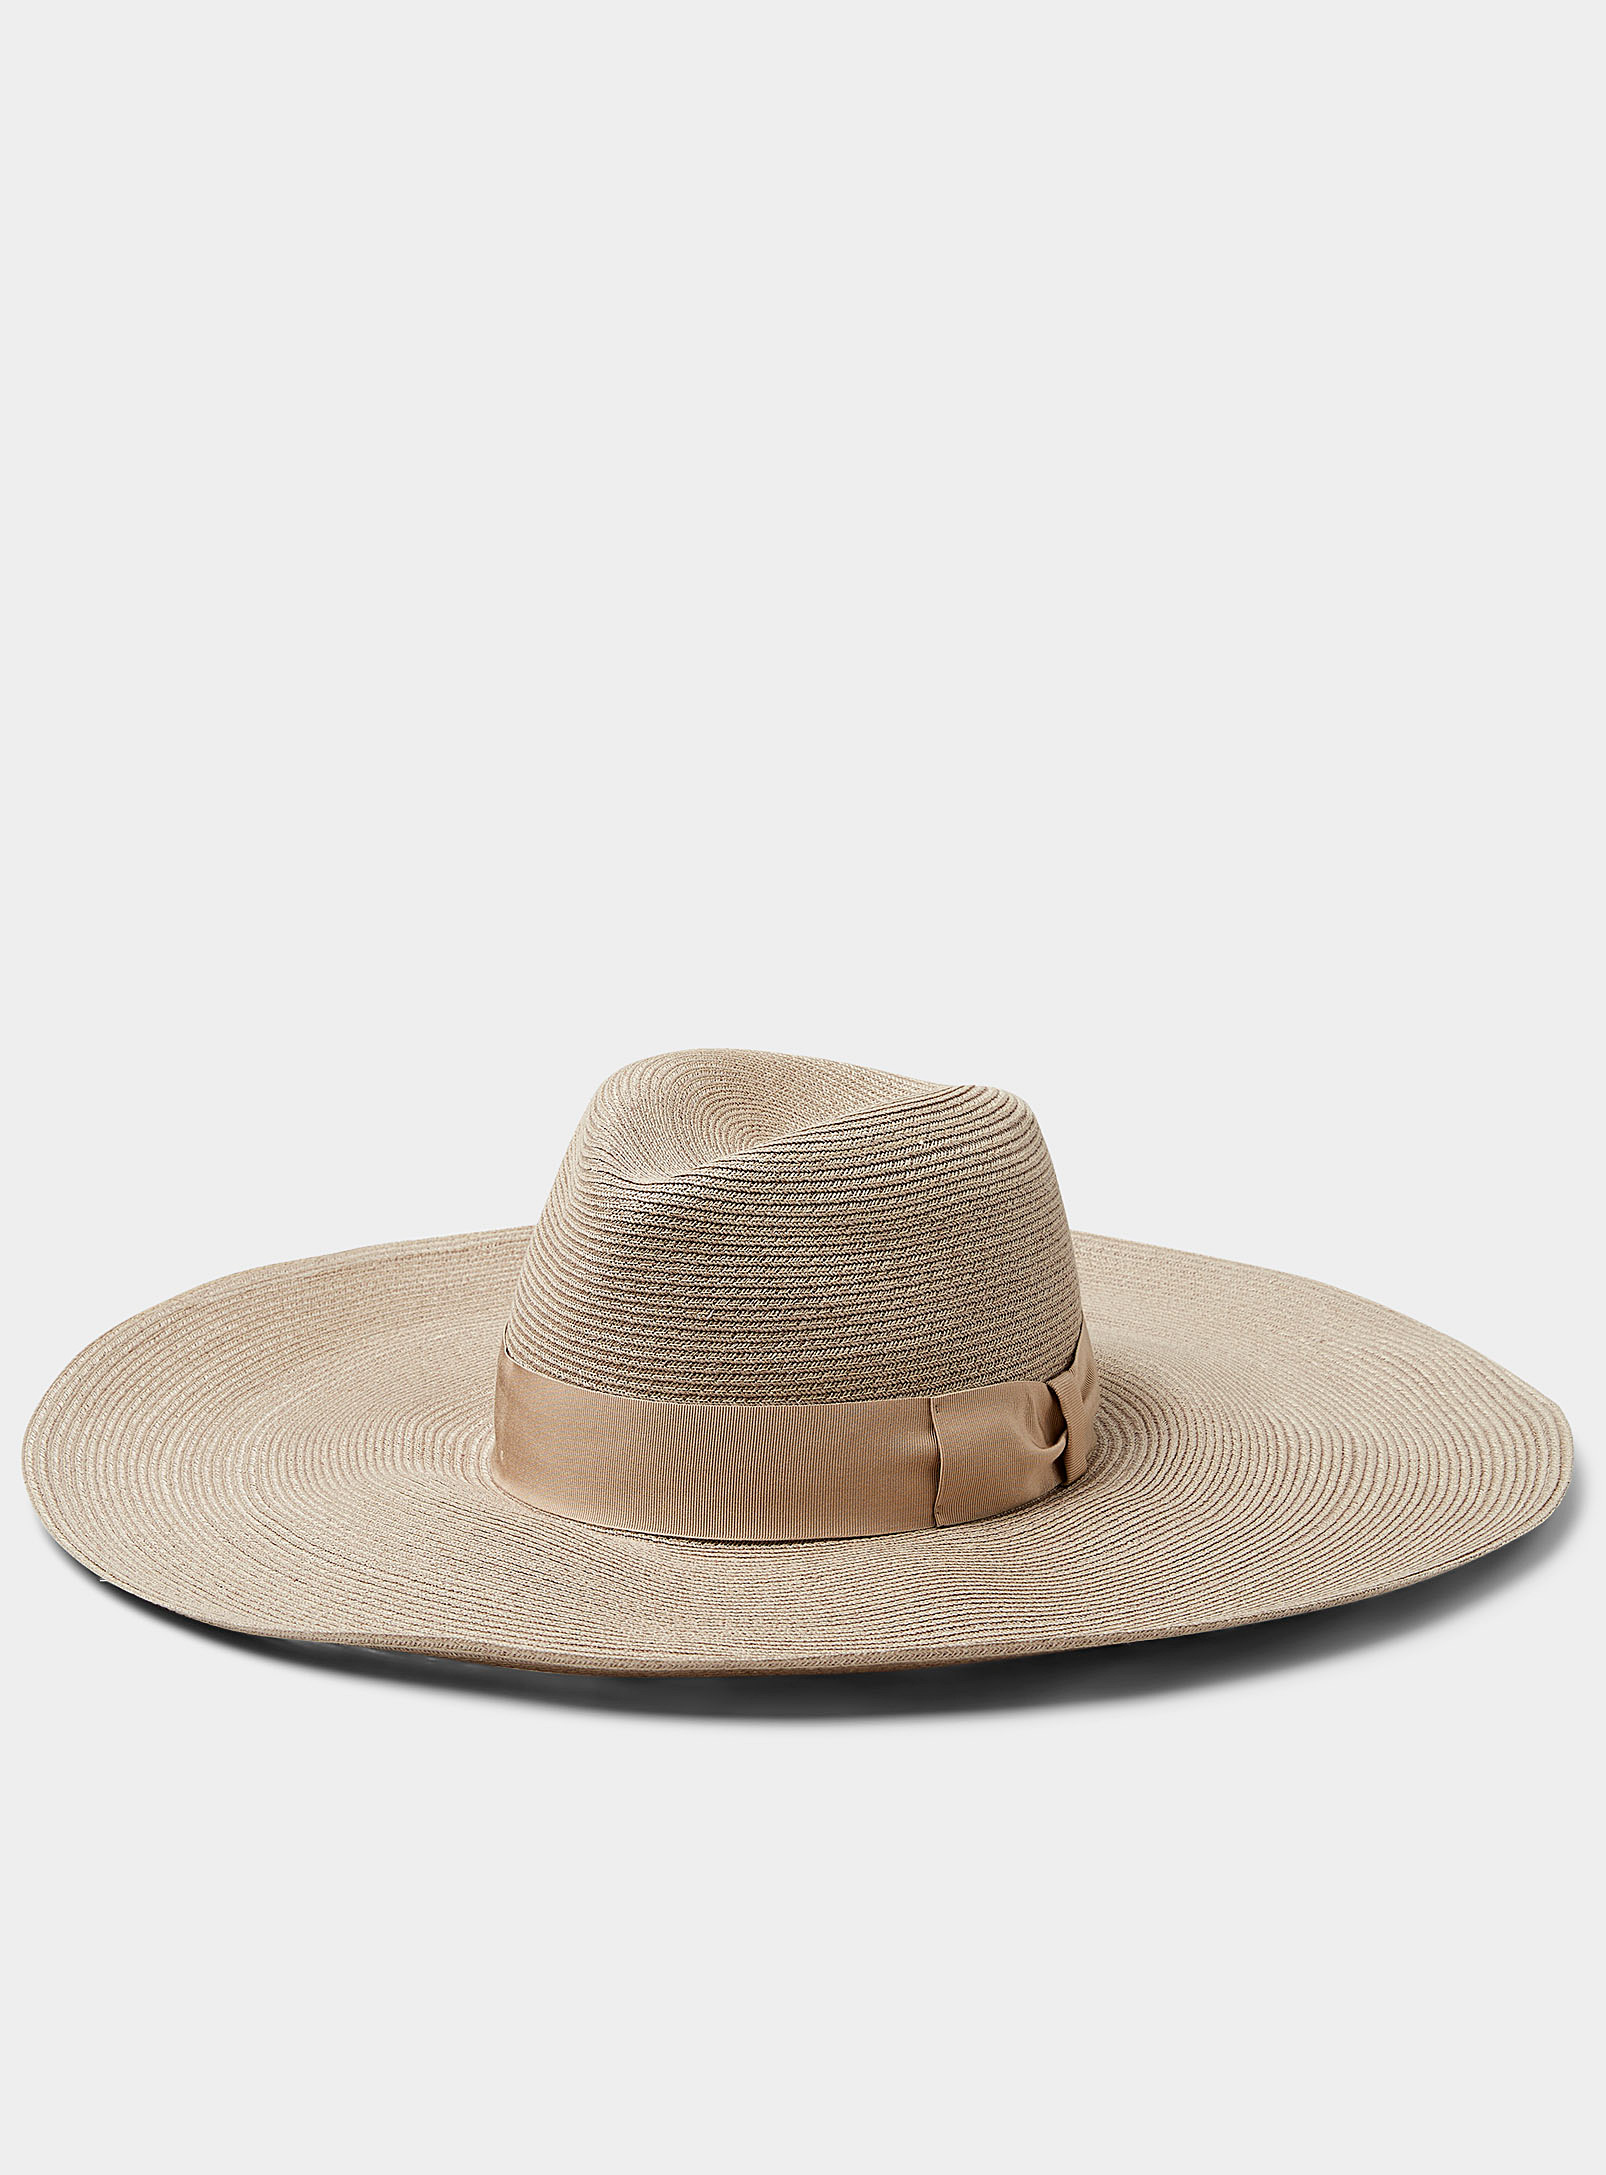 Simons - Women's Taupe hemp wide-brimmed hat